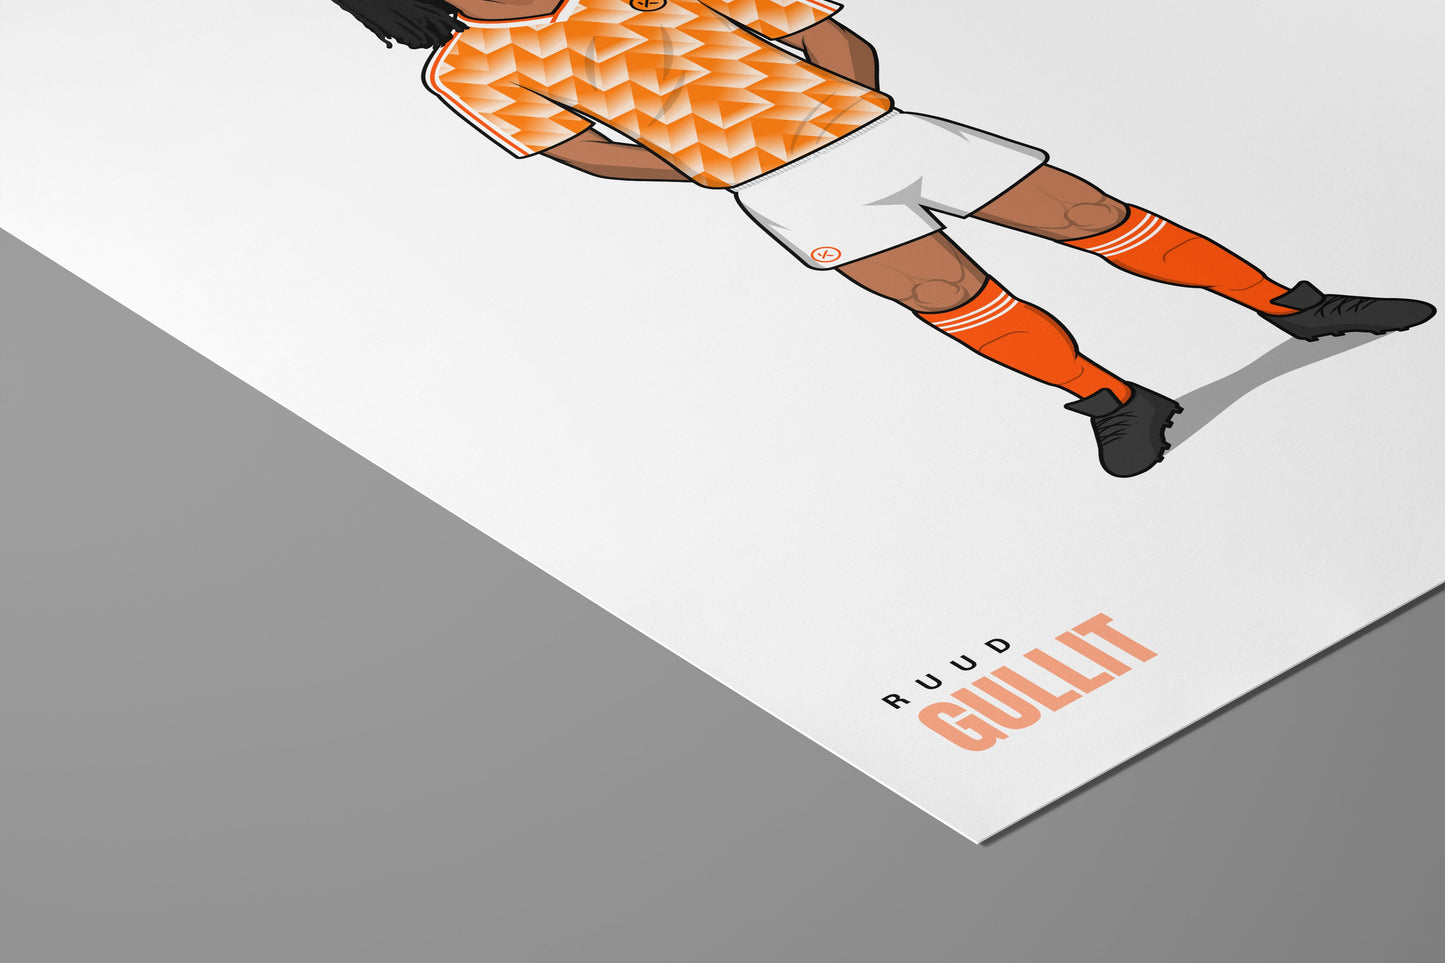 Ruud Gullit - Football Great